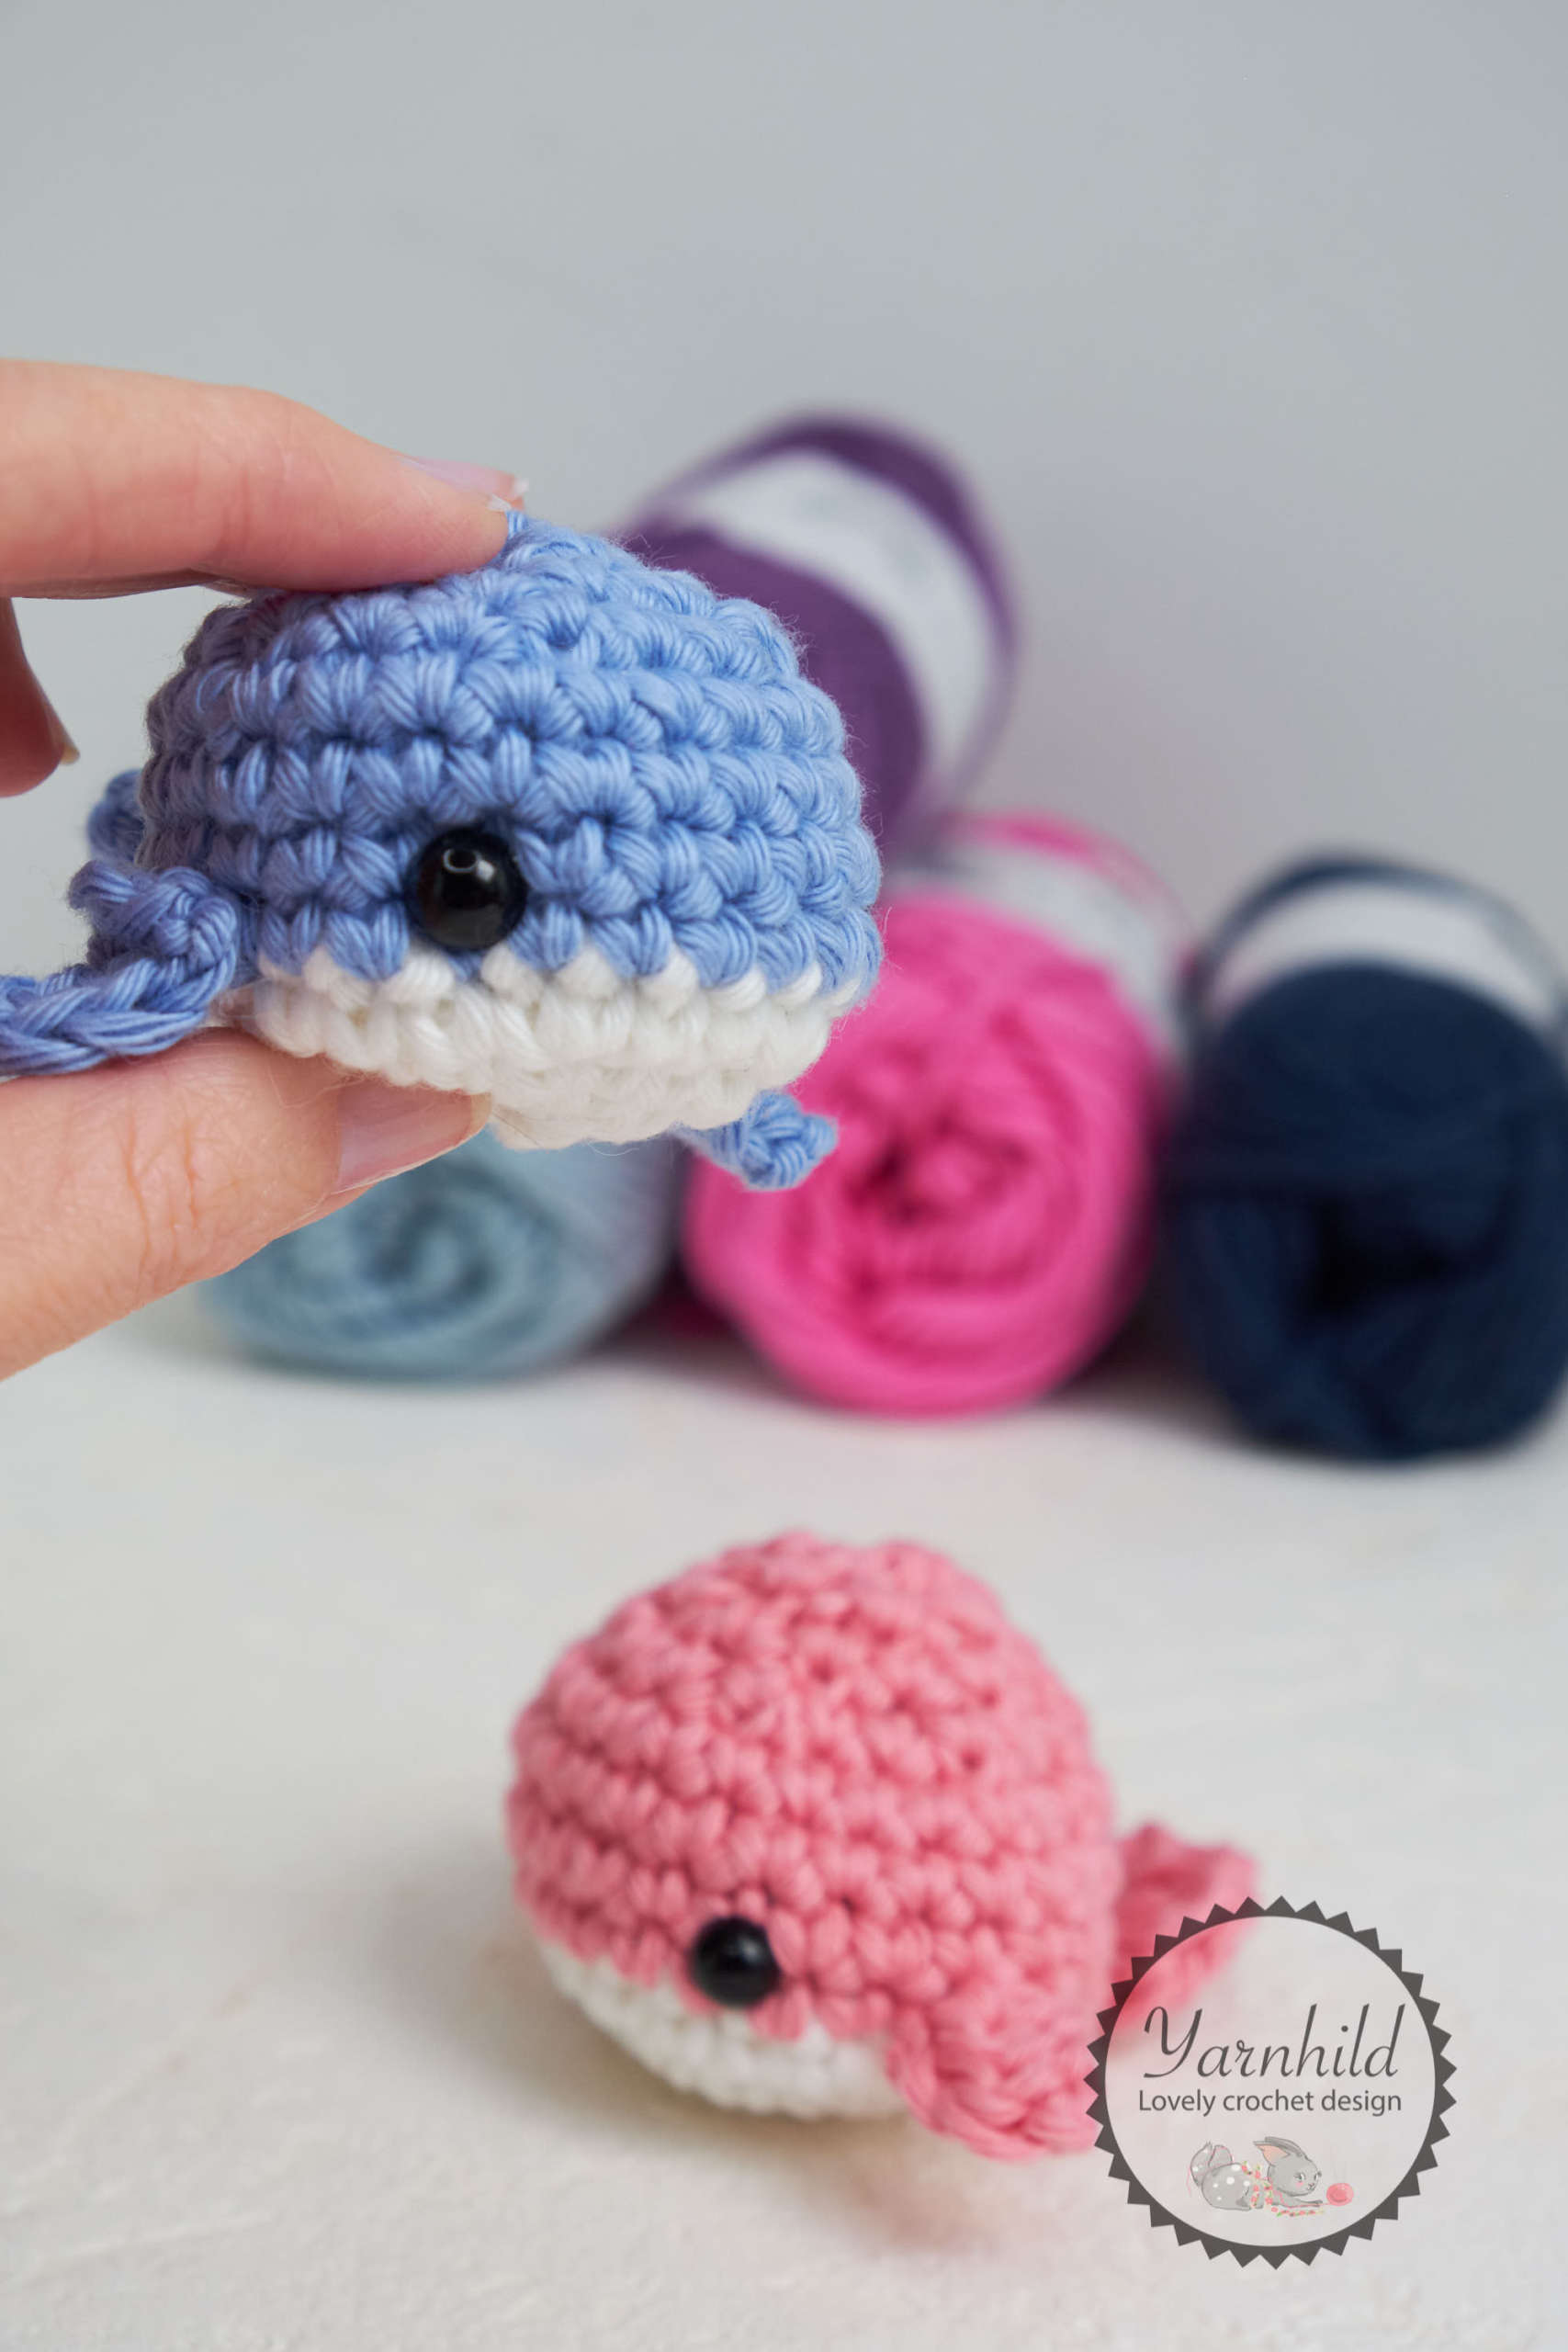 Learn to How to Crochet Amigurumi